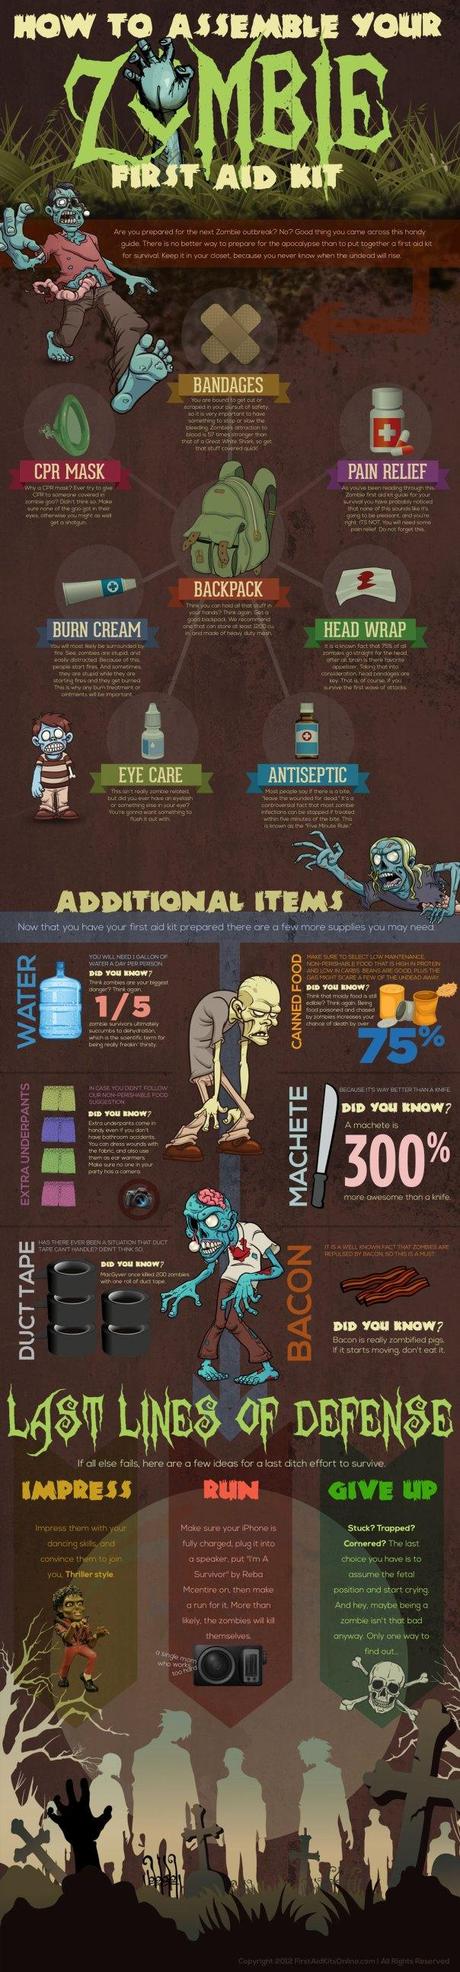 Preparing Your Zombie Apocalypse First Aid Kit